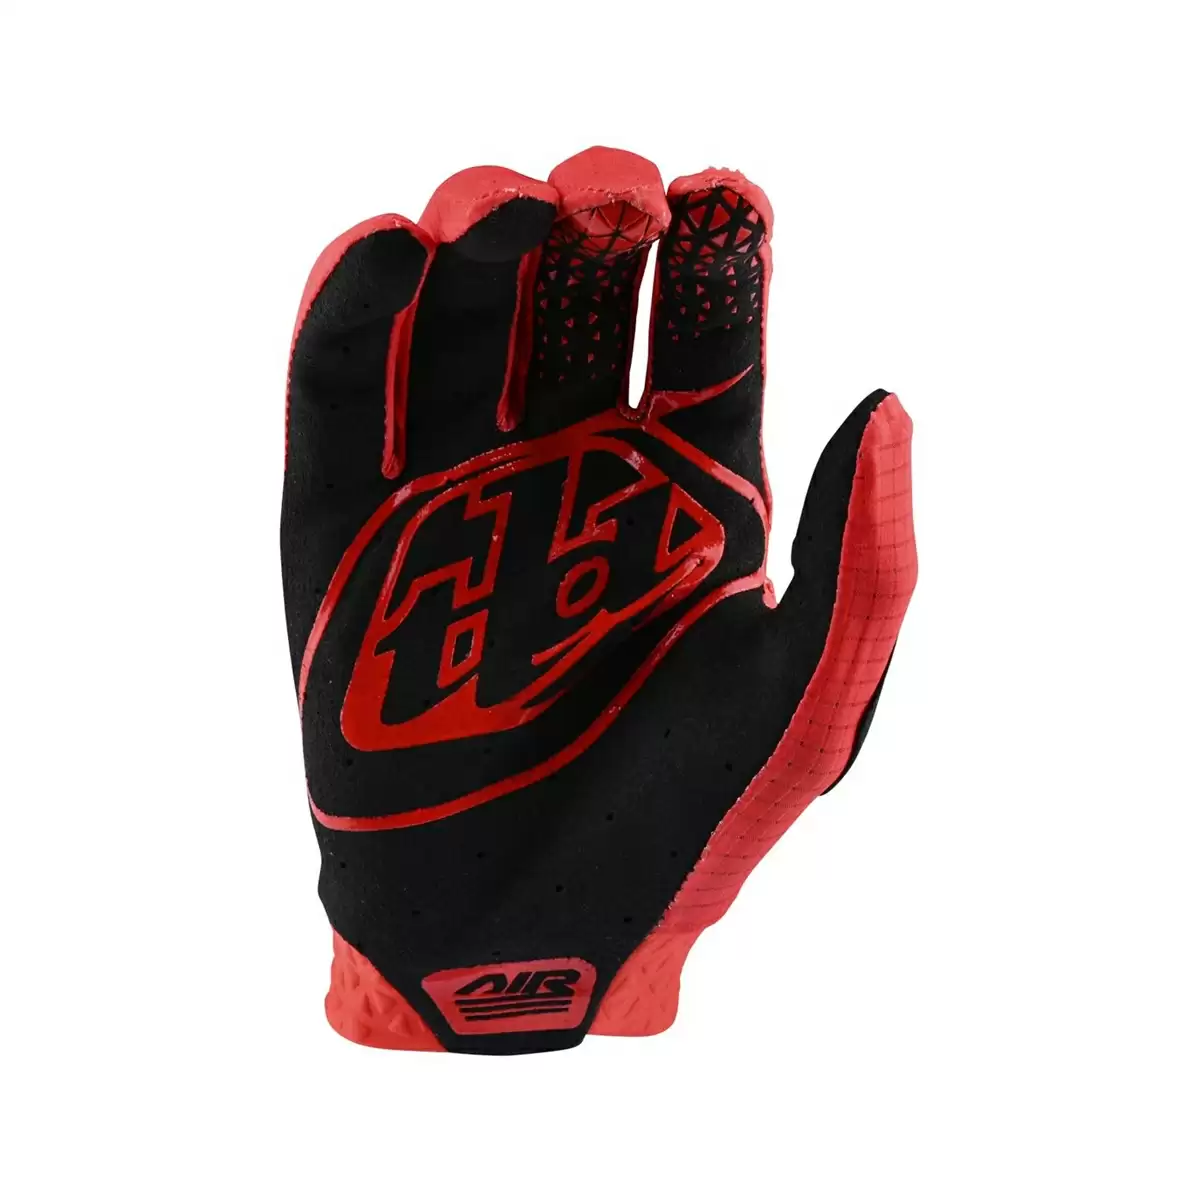 MTB Air Handschuhe Rot Größe M #1